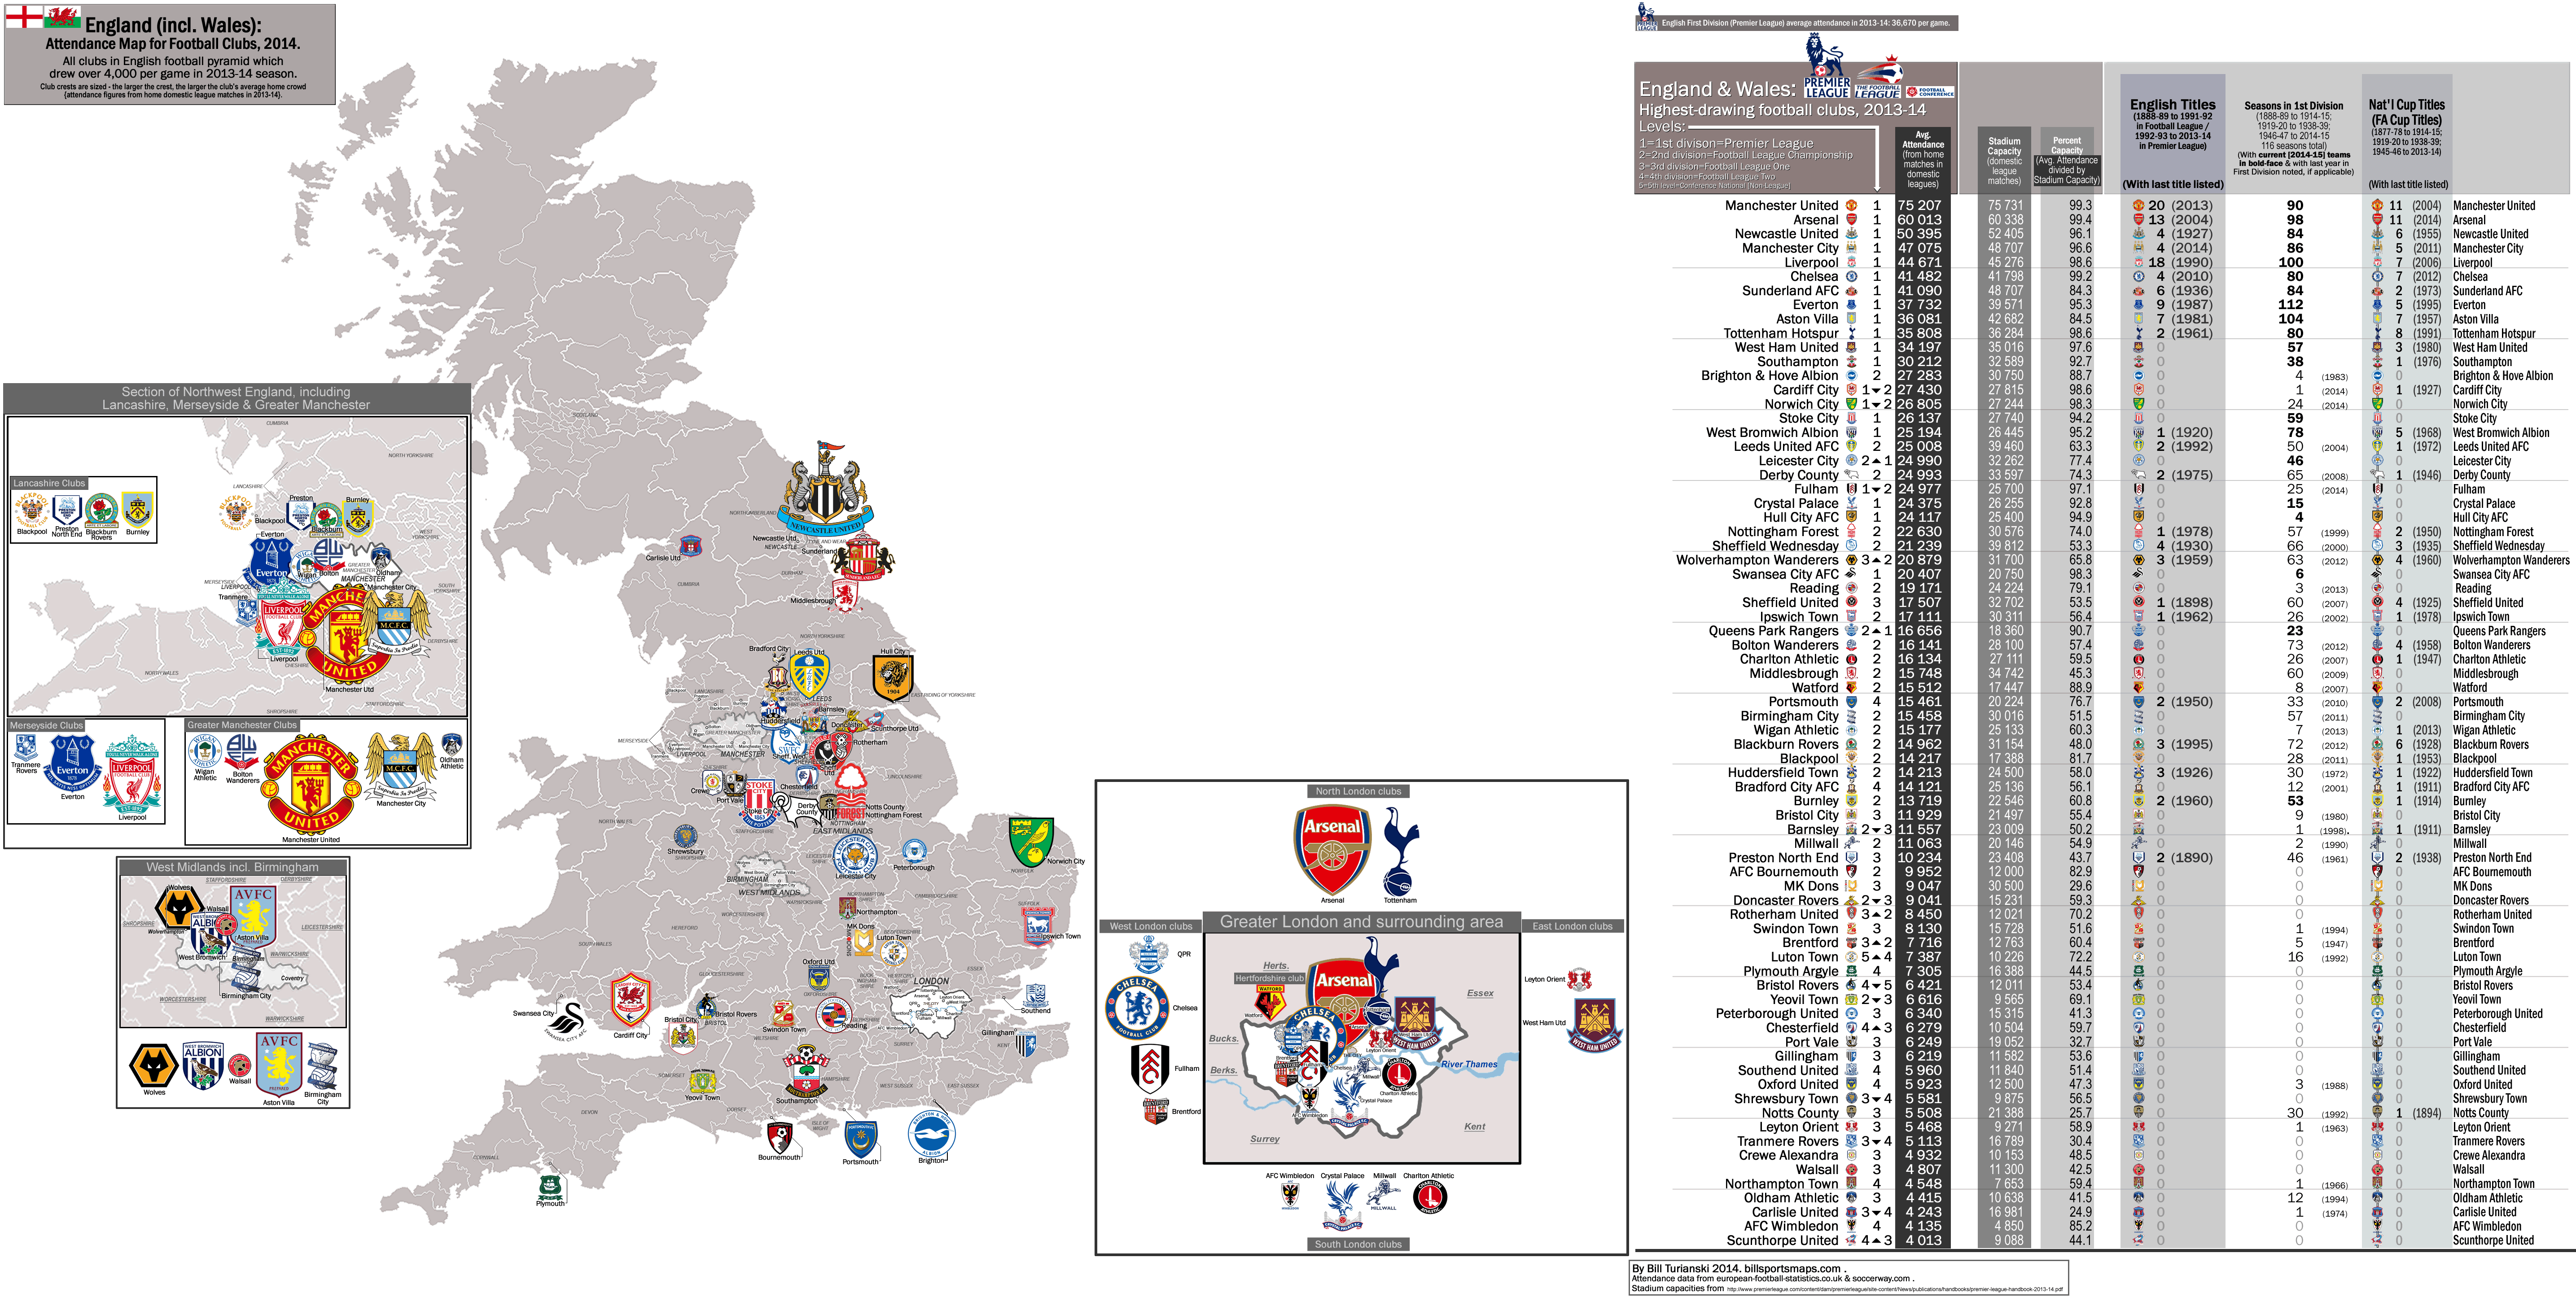 September 2016 - Premier League Teams Wallpaper5740 x 2900